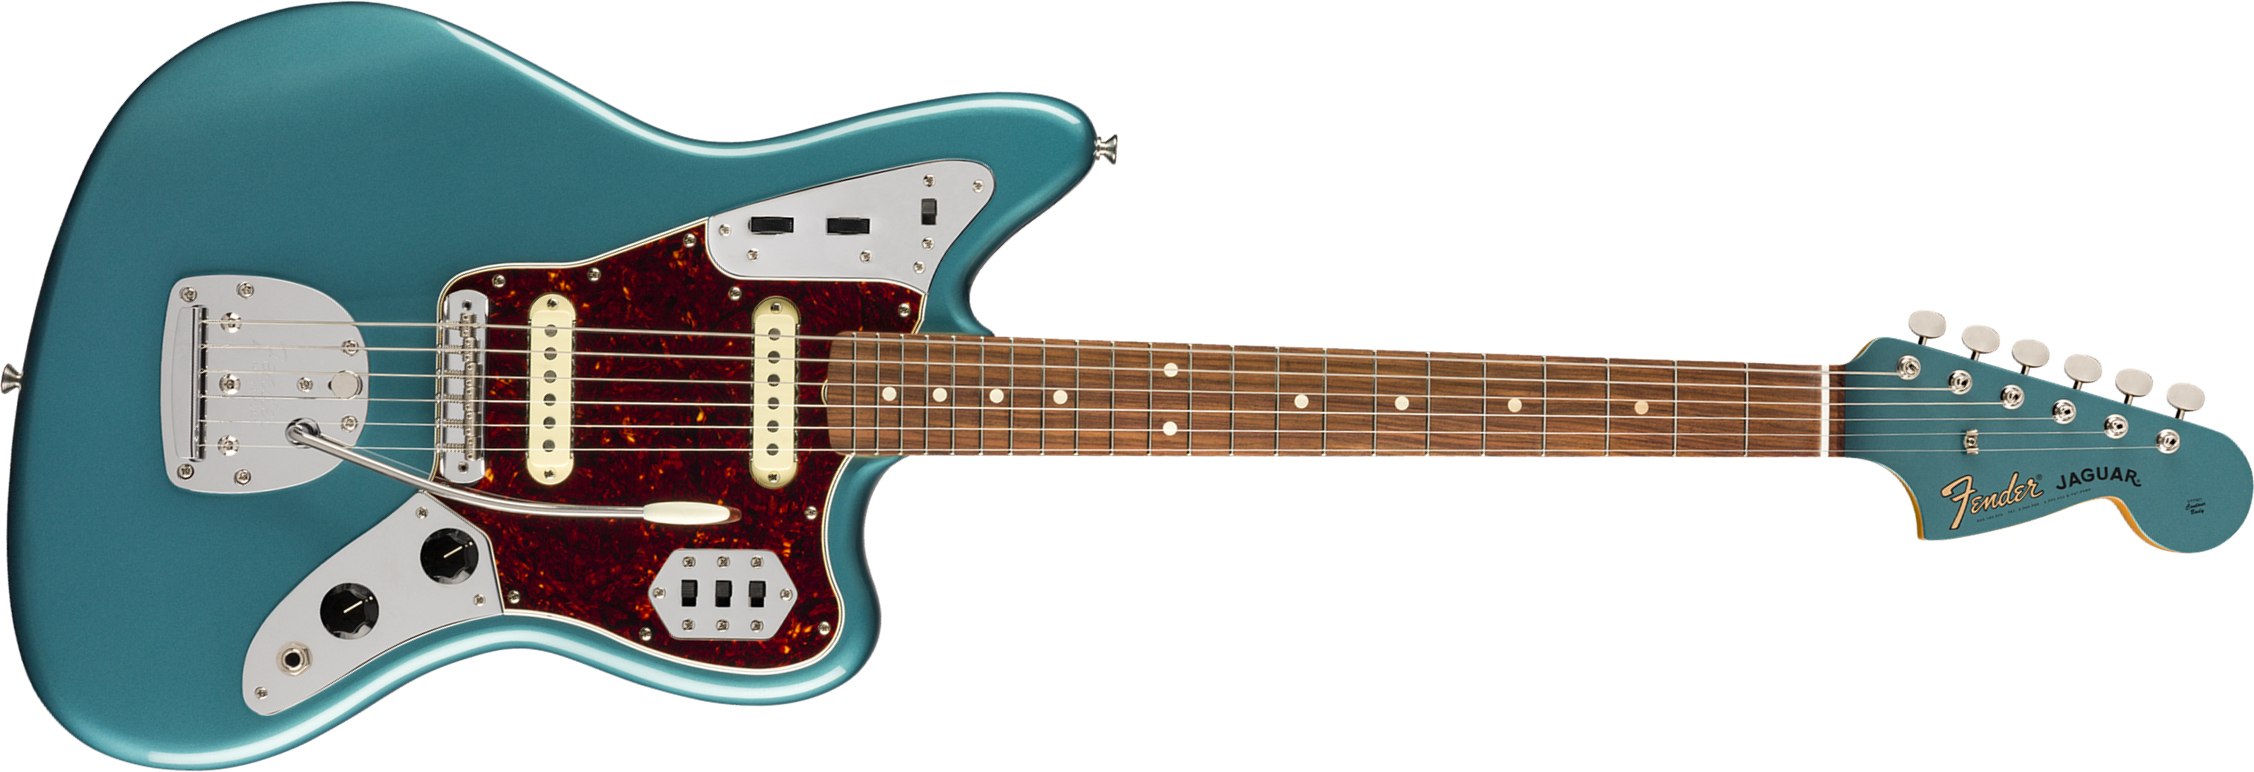 Fender Jaguar 60s Vintera Vintage Mex Pf - Ocean Turquoise - Guitarra electrica retro rock - Main picture